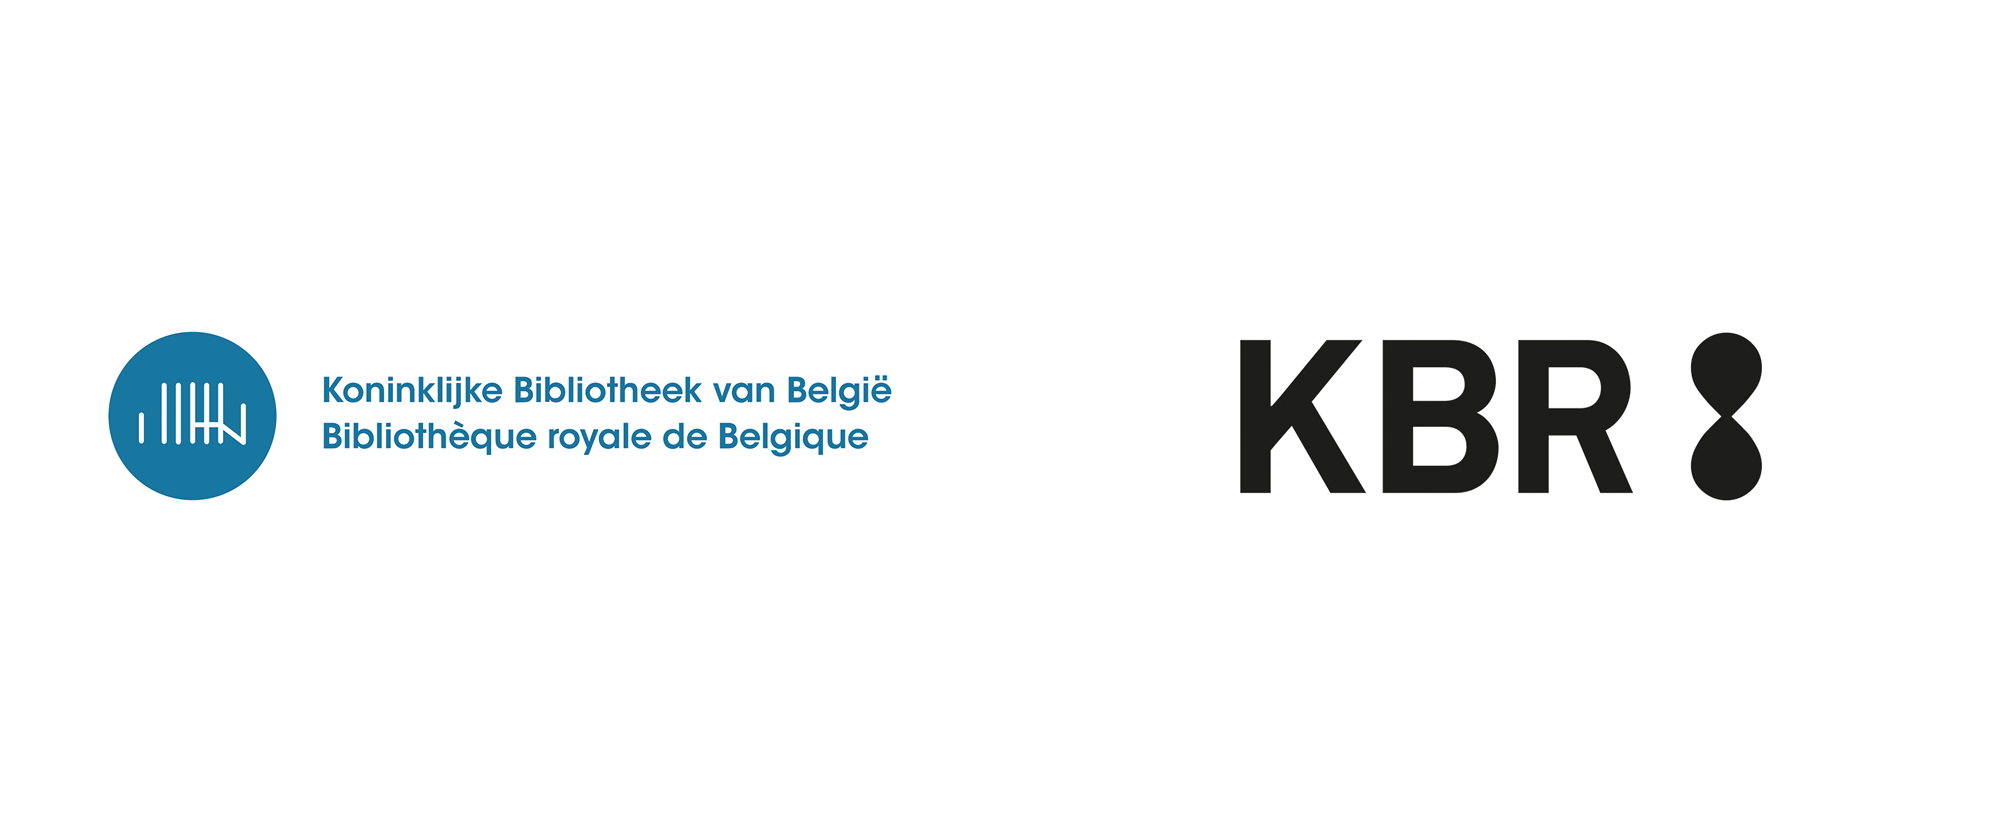 KBR Logo - Brand New: New Logo and Identity for KBR by Teamm, Dyncomm